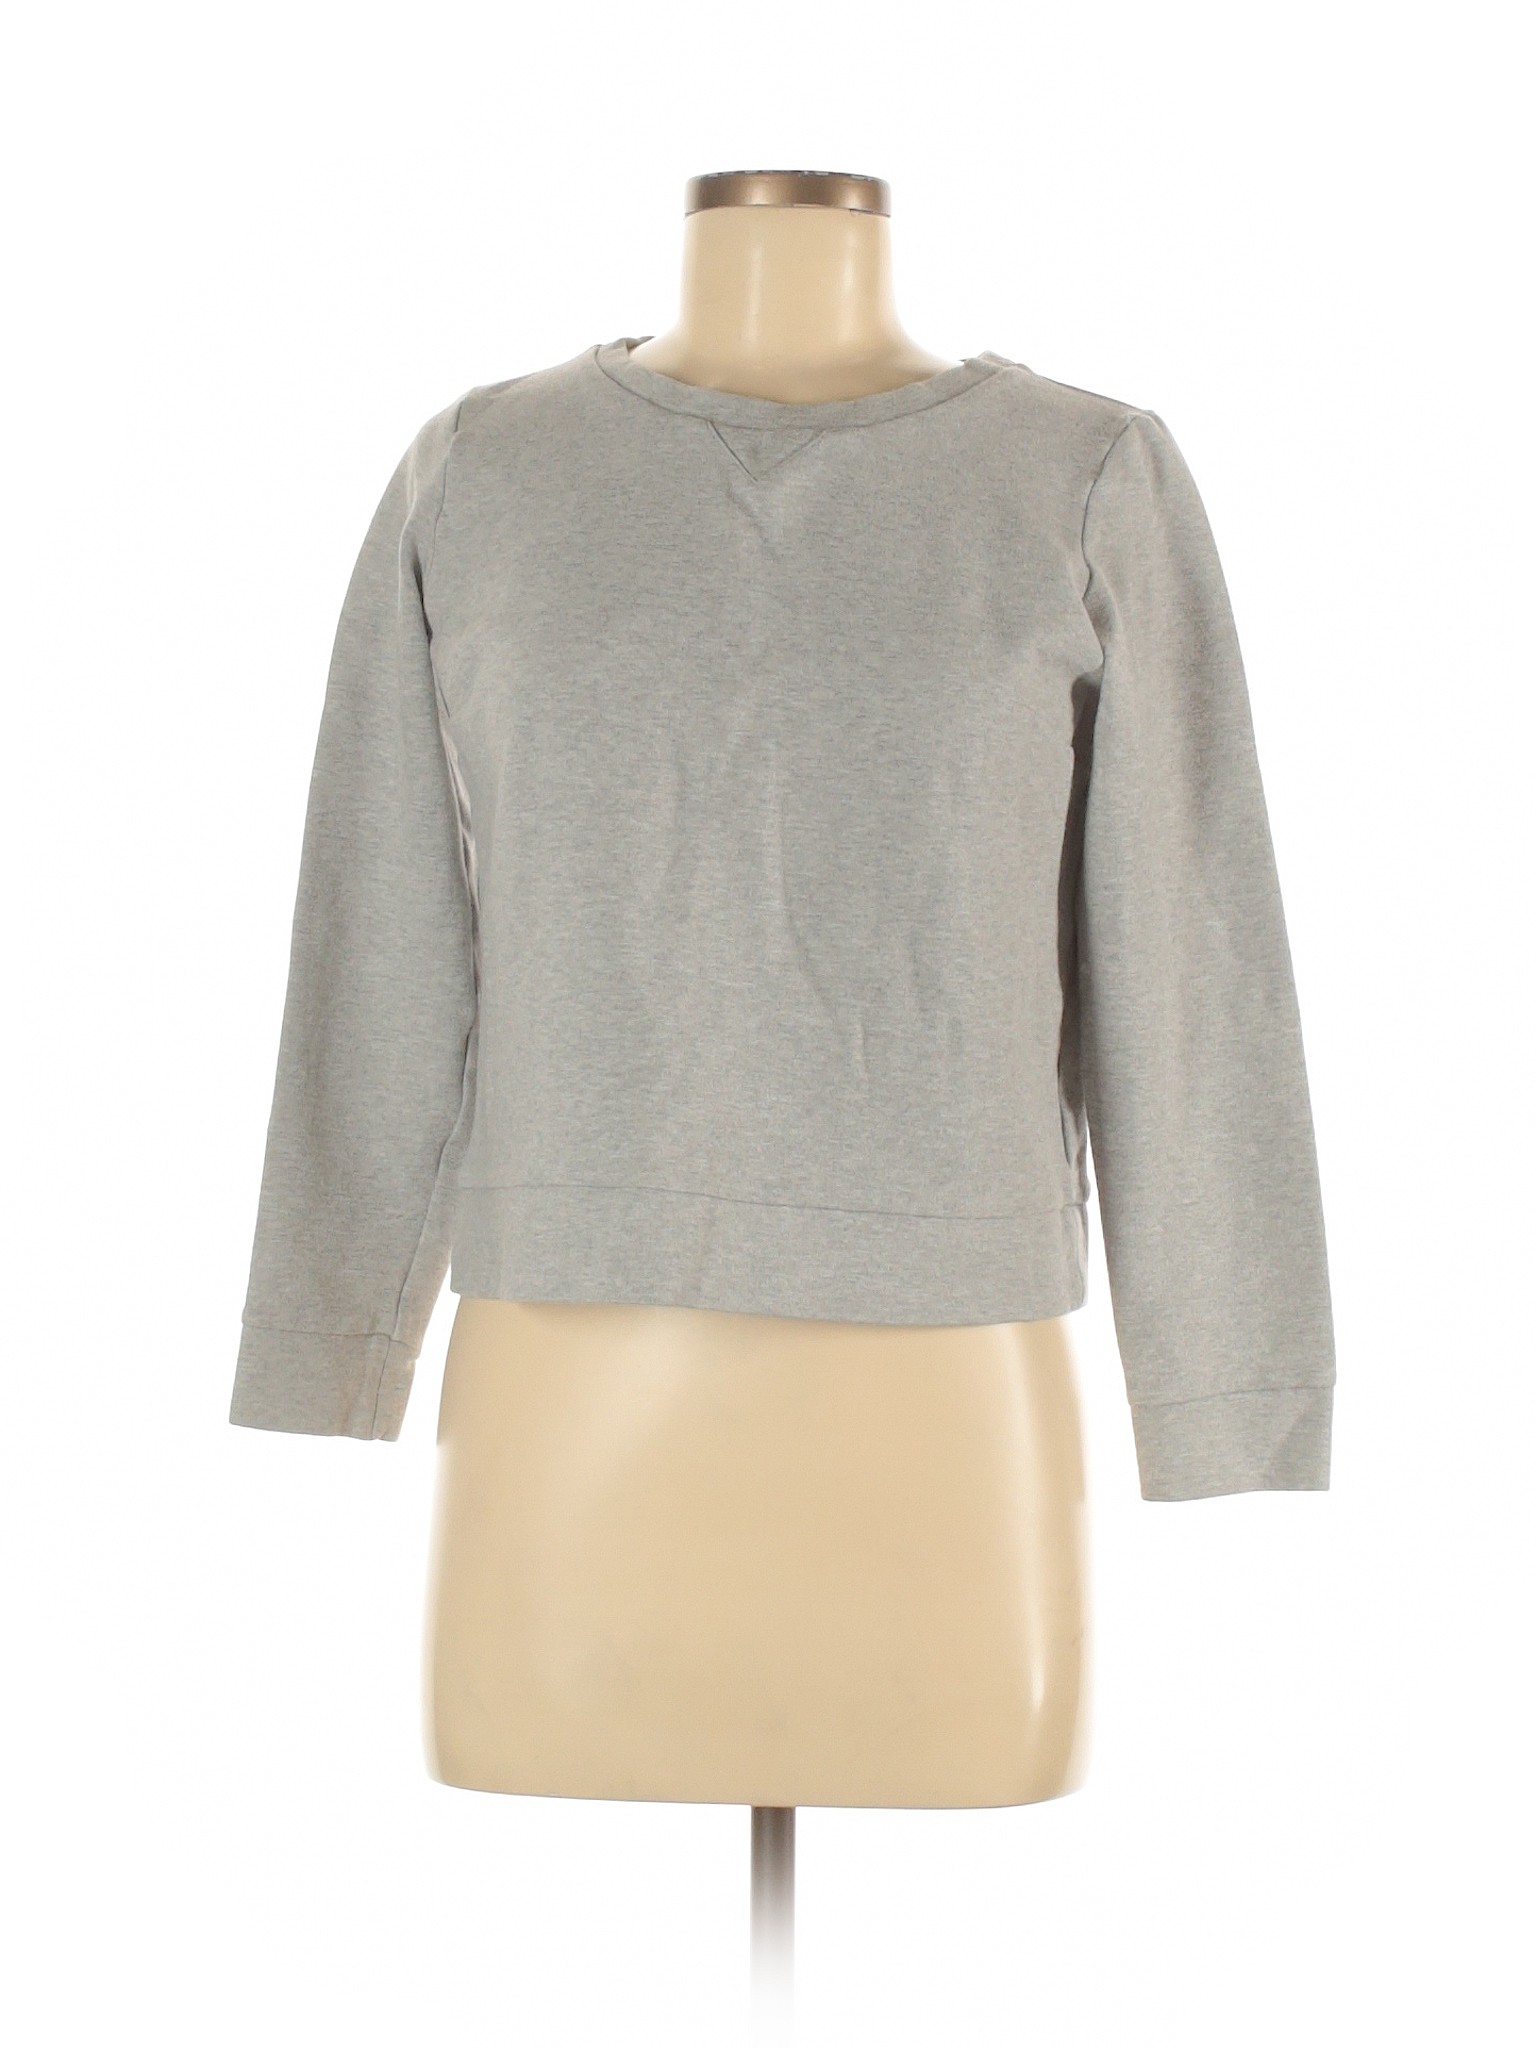 Club Monaco Women Gray Sweatshirt M | eBay